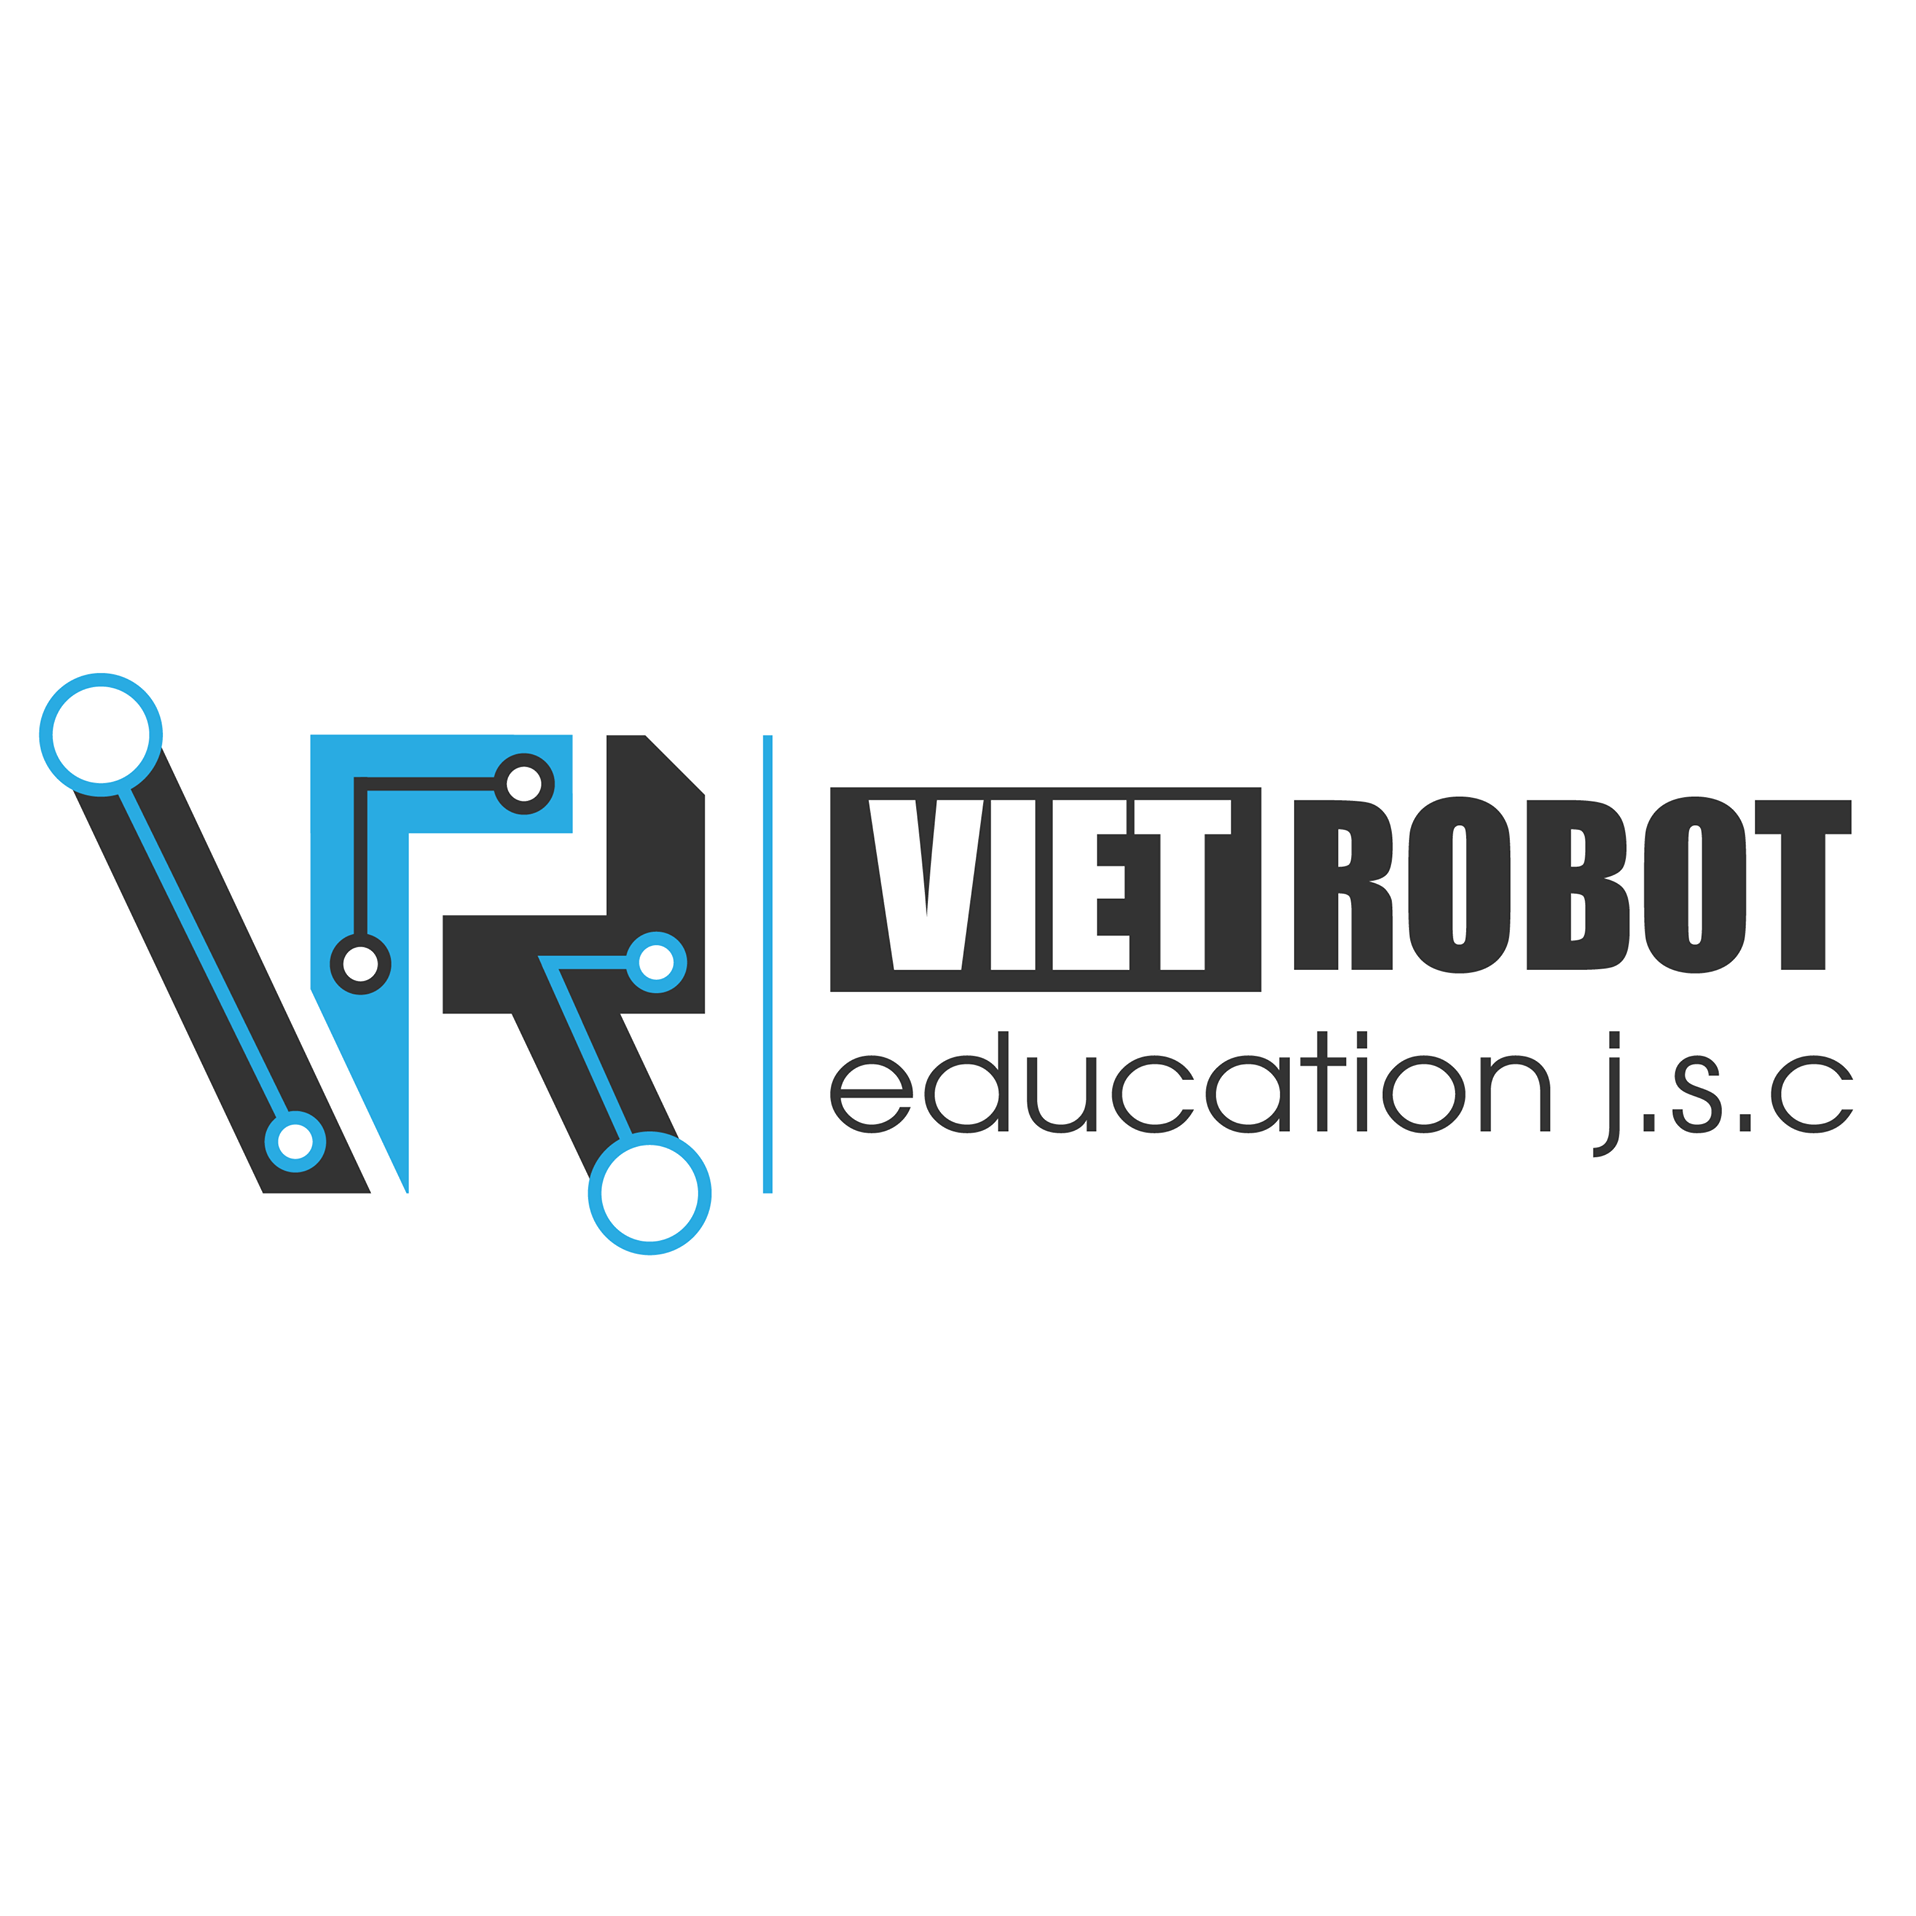 Viet Robot Education Center